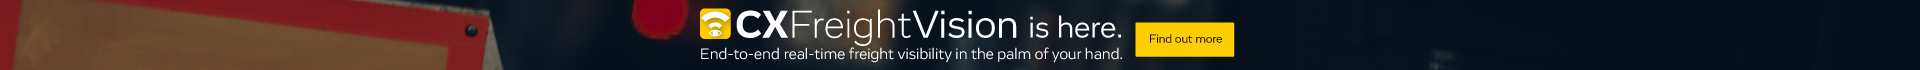 freight-vision-website-banner-6